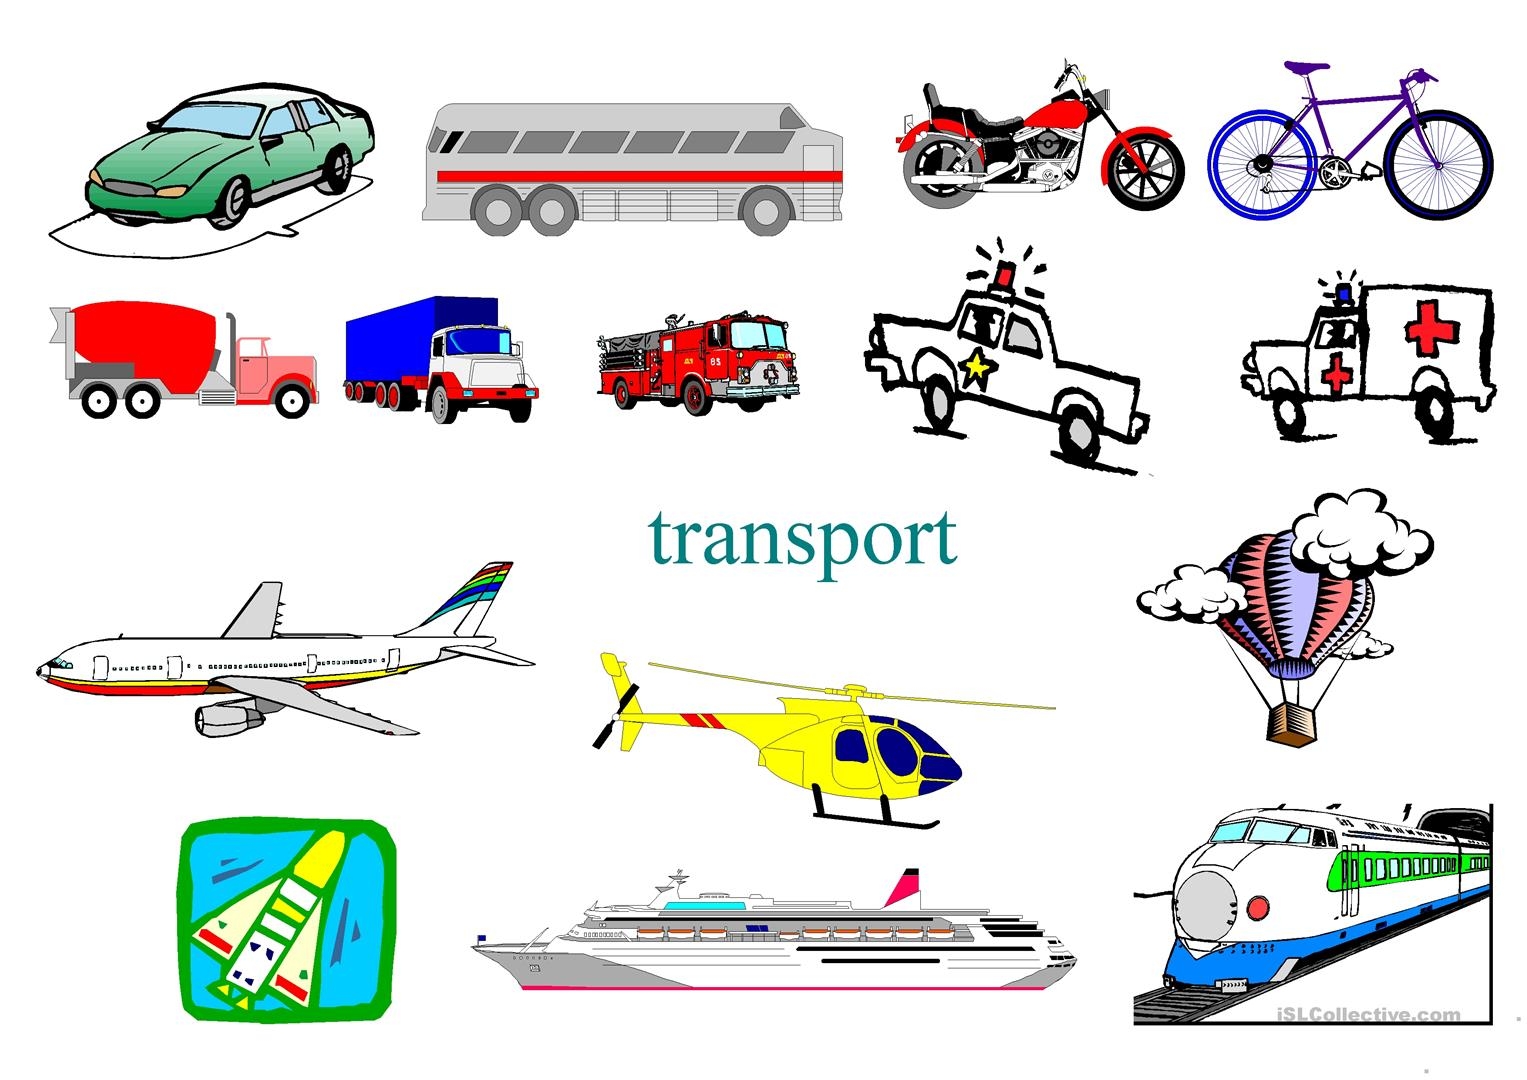 Transport picture. Транспорт на английском. Транспорт на английском для детей. Виды транспорта на английском языке. Виды транспорта на английском для детей.